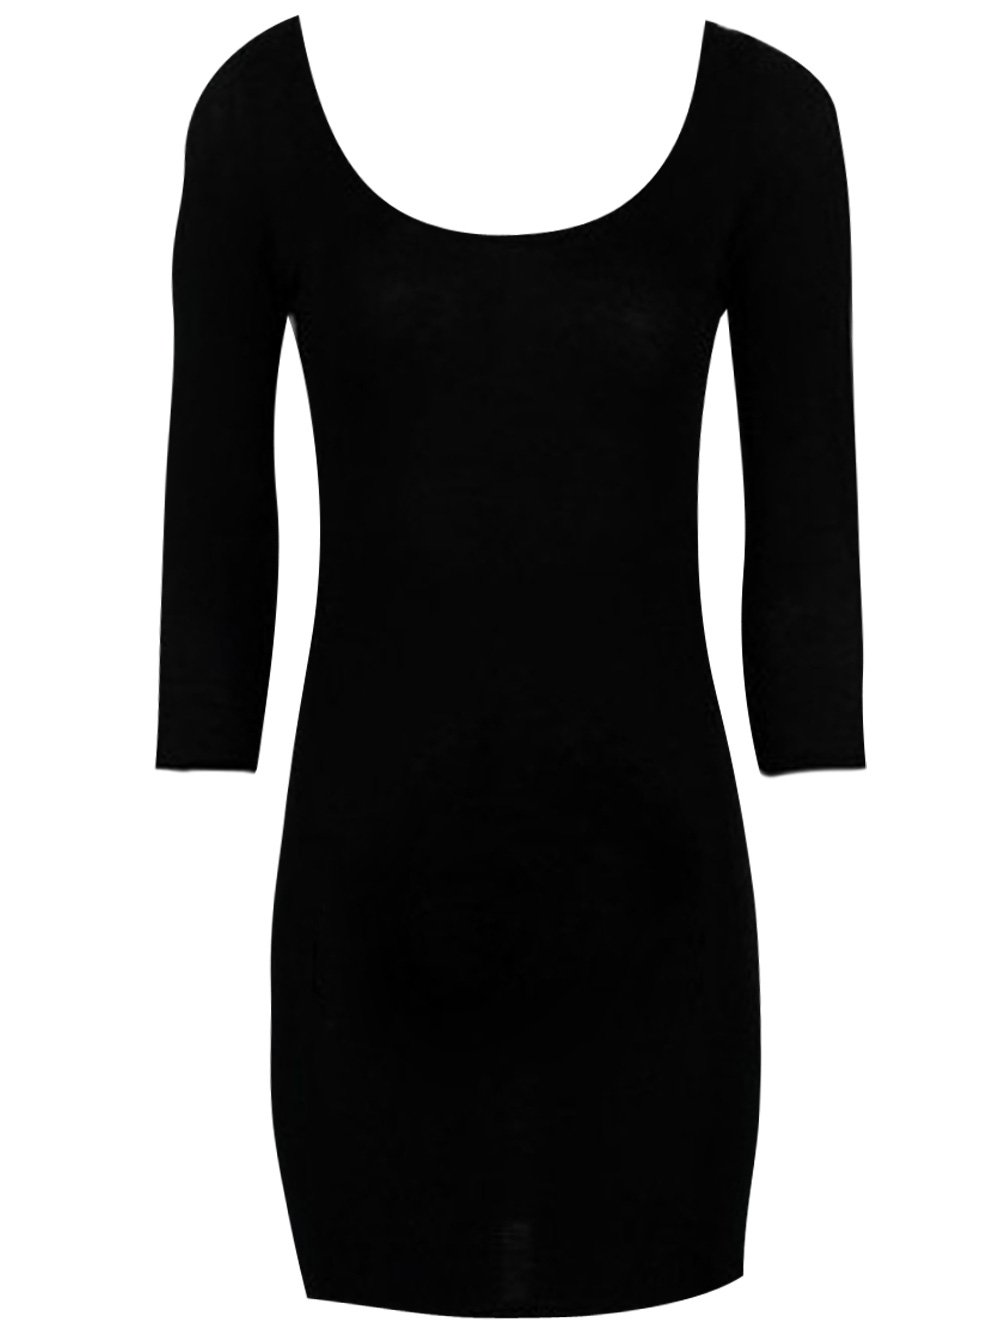 Black Bodycon Dress Picture Collection | DressedUpGirl.com